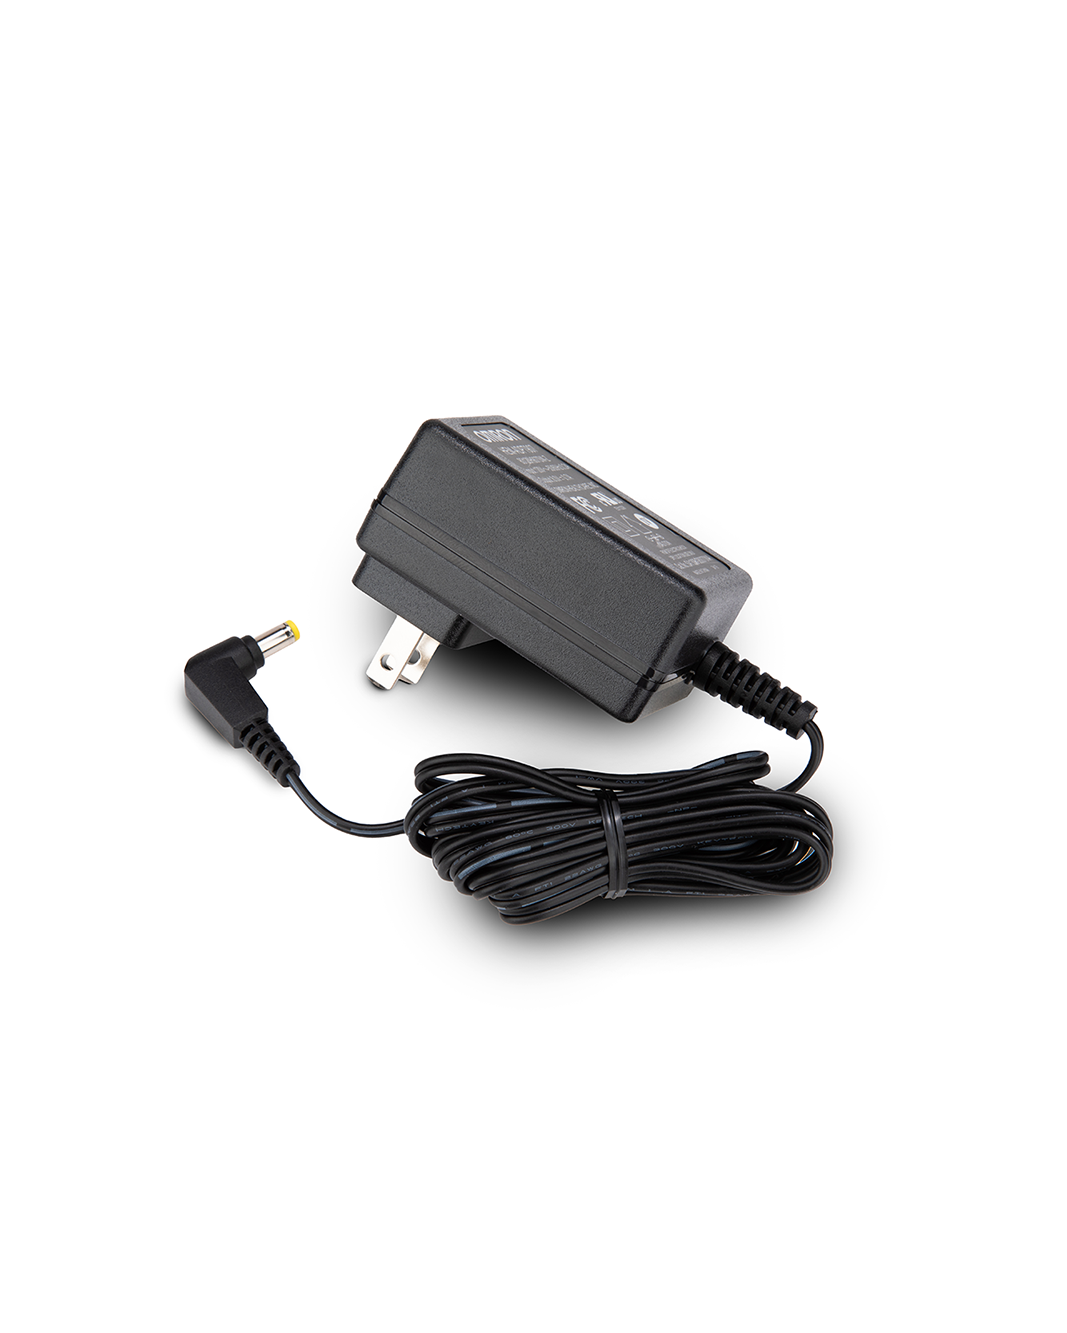 OMRON AC Adapter for HEM-907XL (HEM-ADPT907)